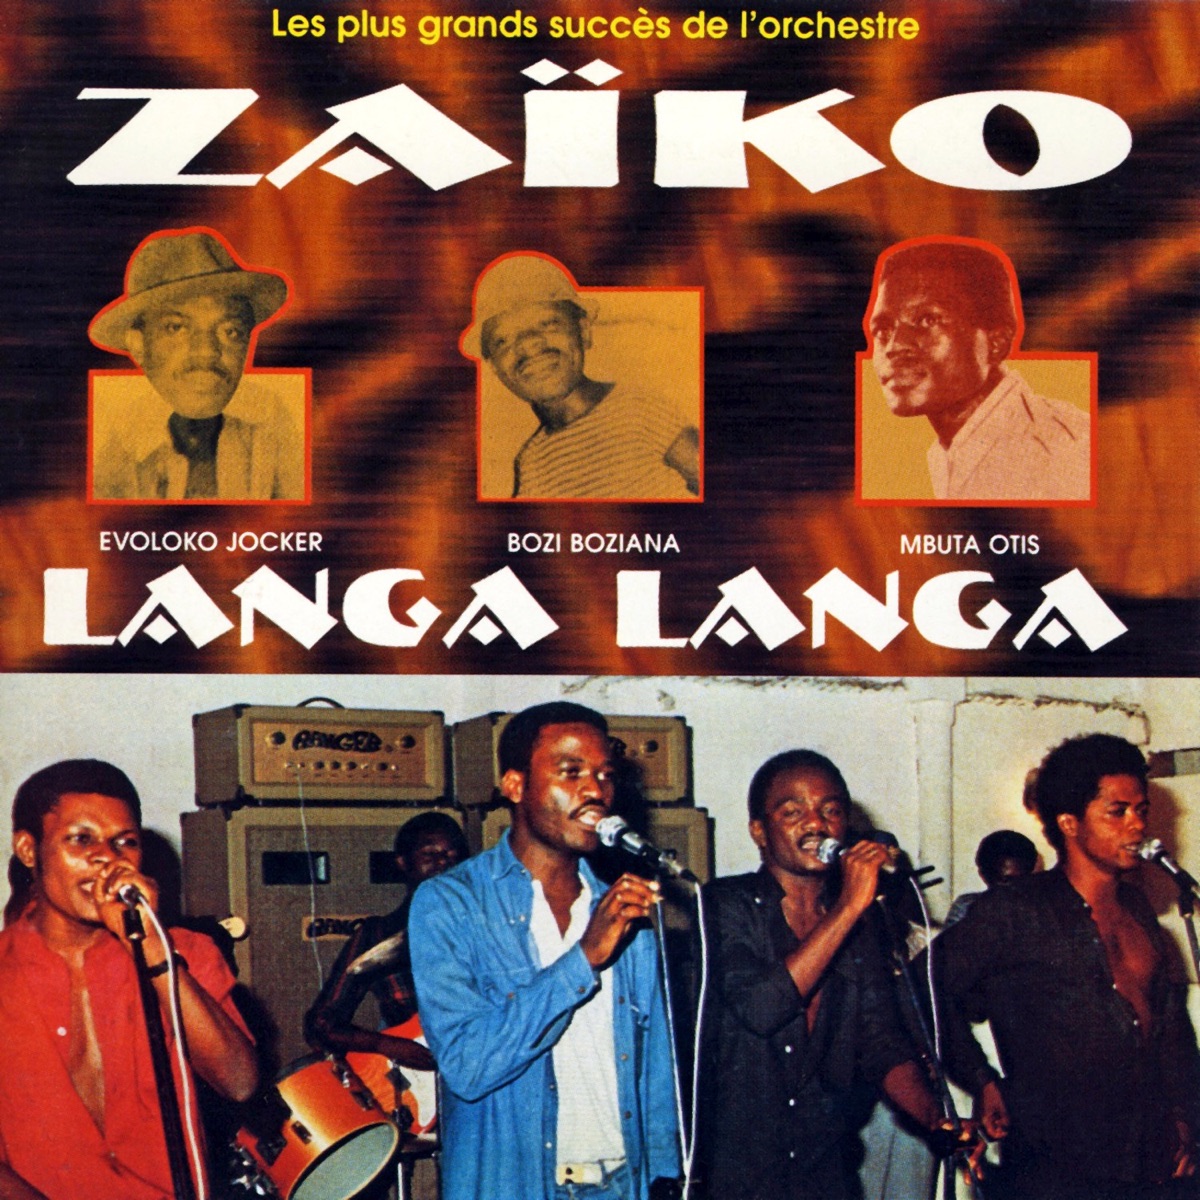 Les Plus Grands Succès de L'orchestre Zaïko Langa Langa – Album par Zaïko  Langa Langa – Apple Music